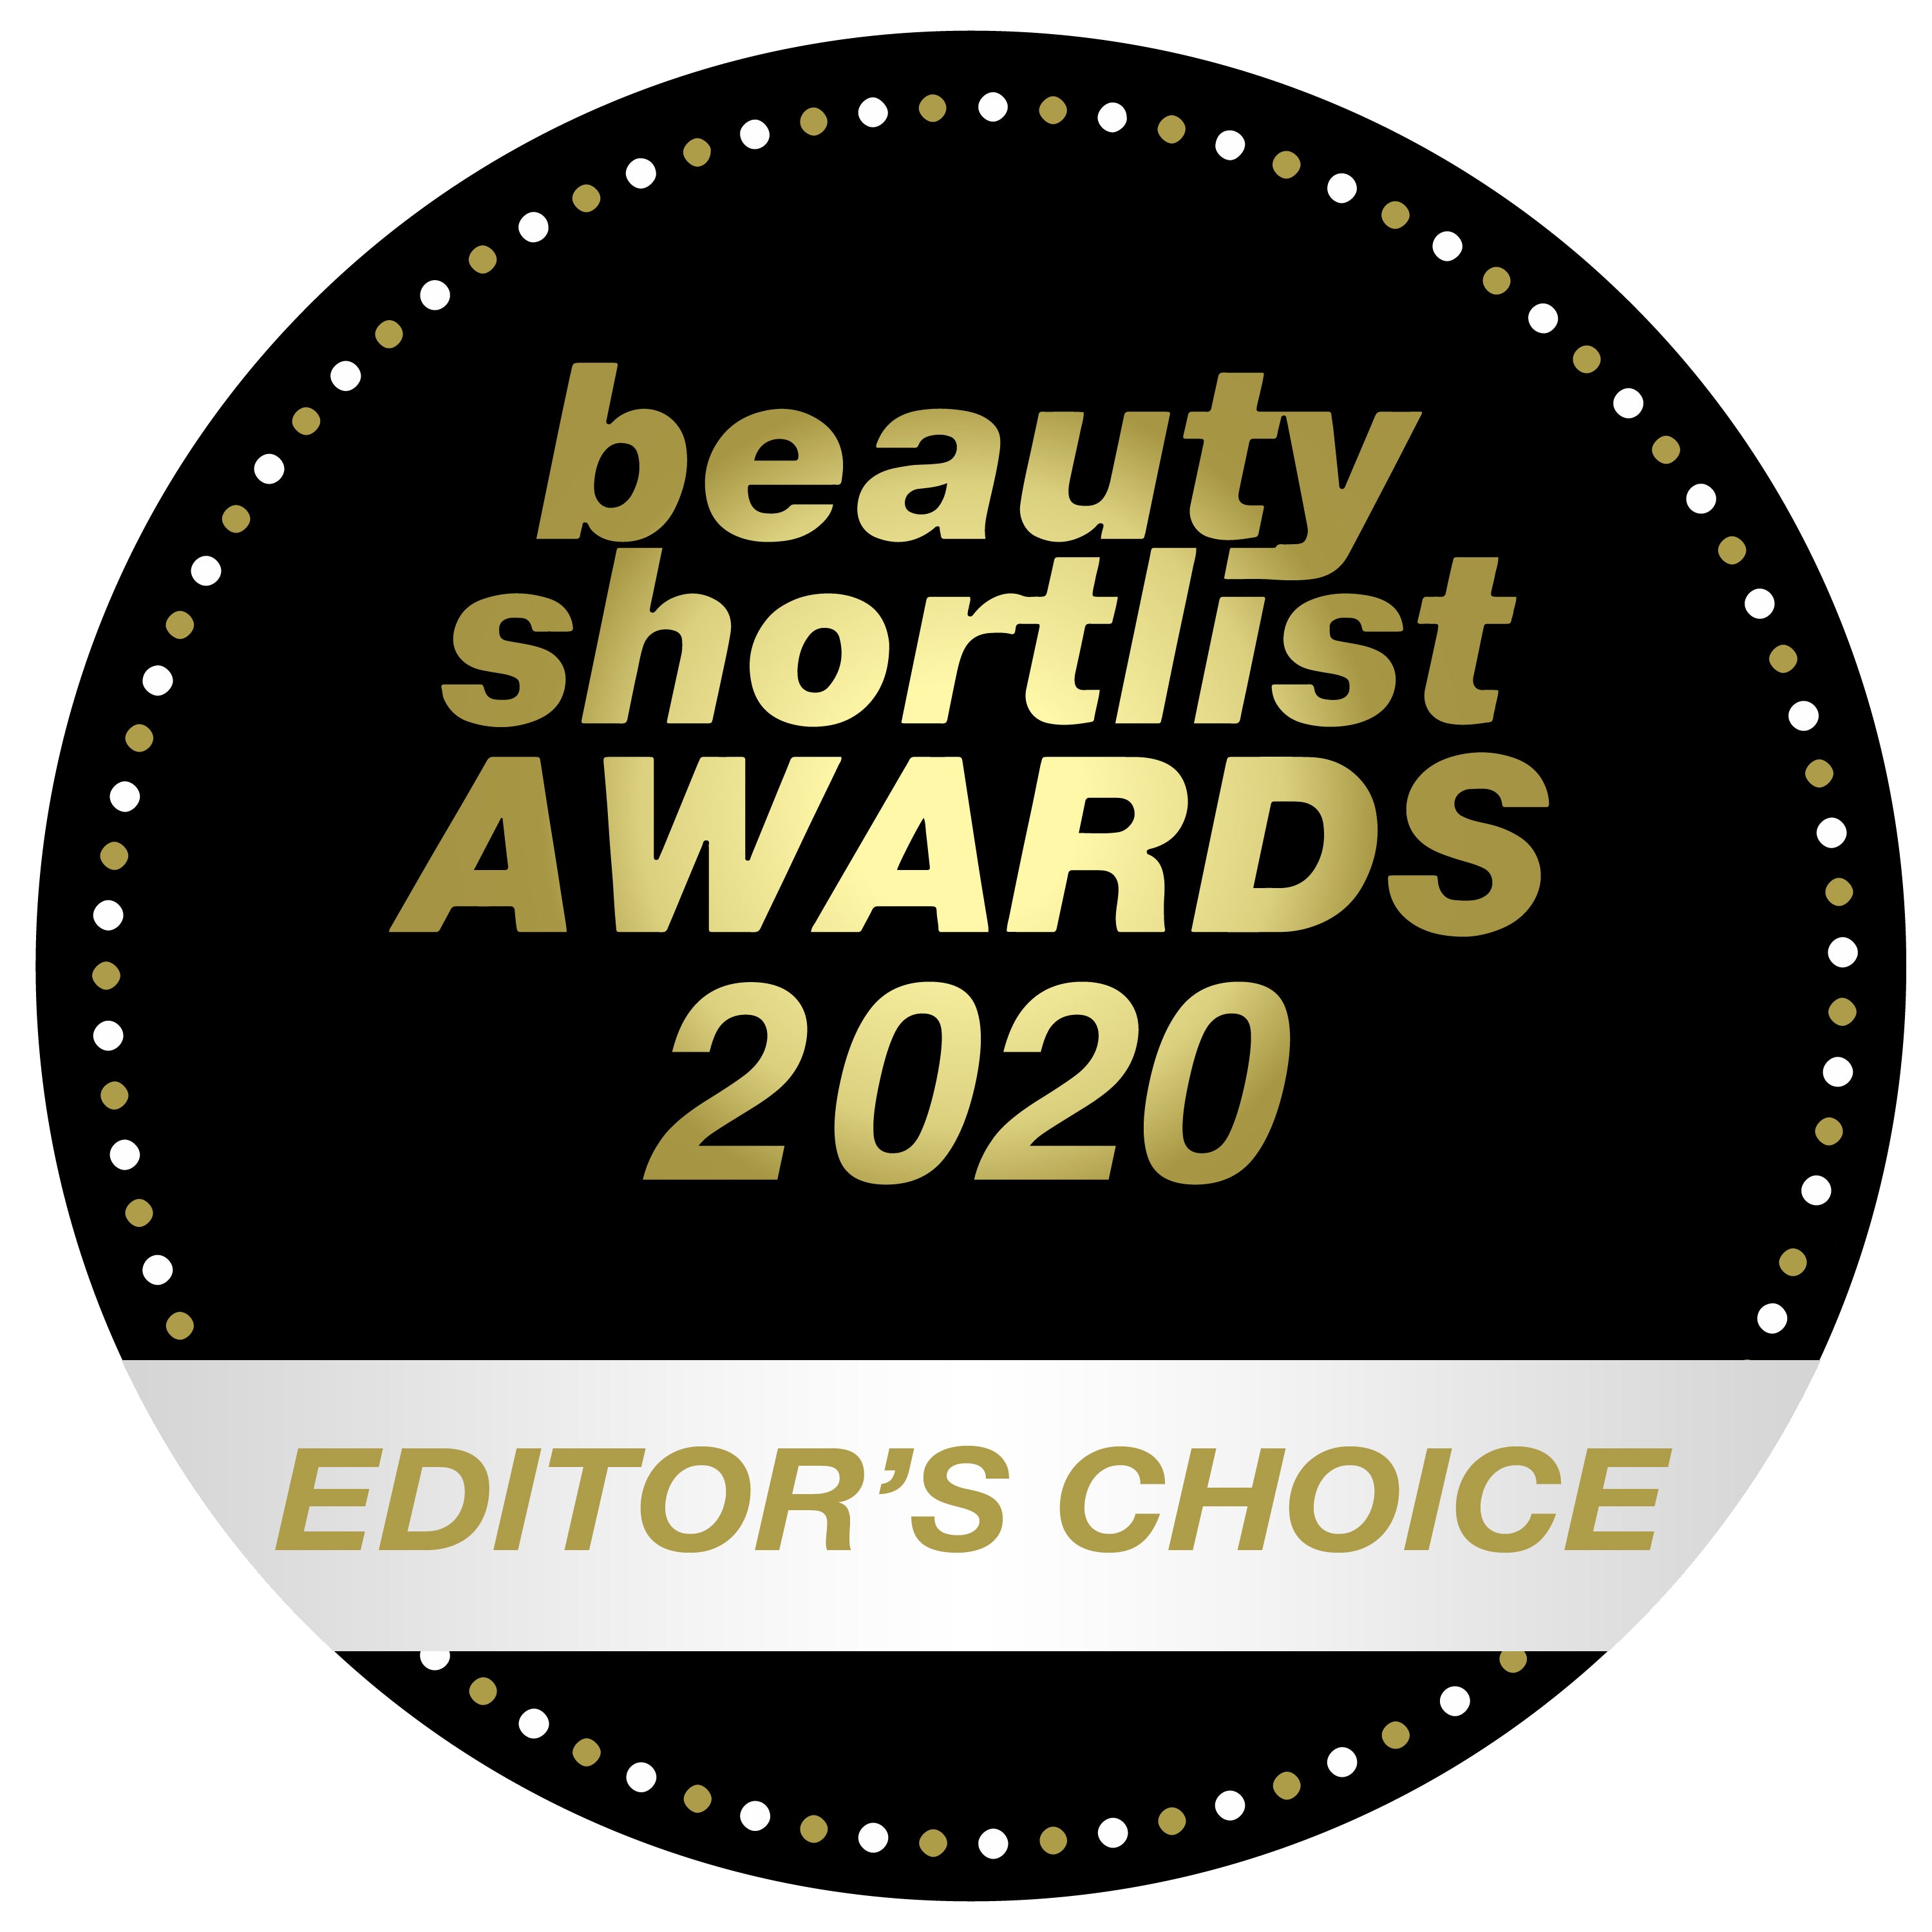 Editor's choice at the Beauty Shortlist Awards 2020 for Alteya's Bulgarian Rose Fields.